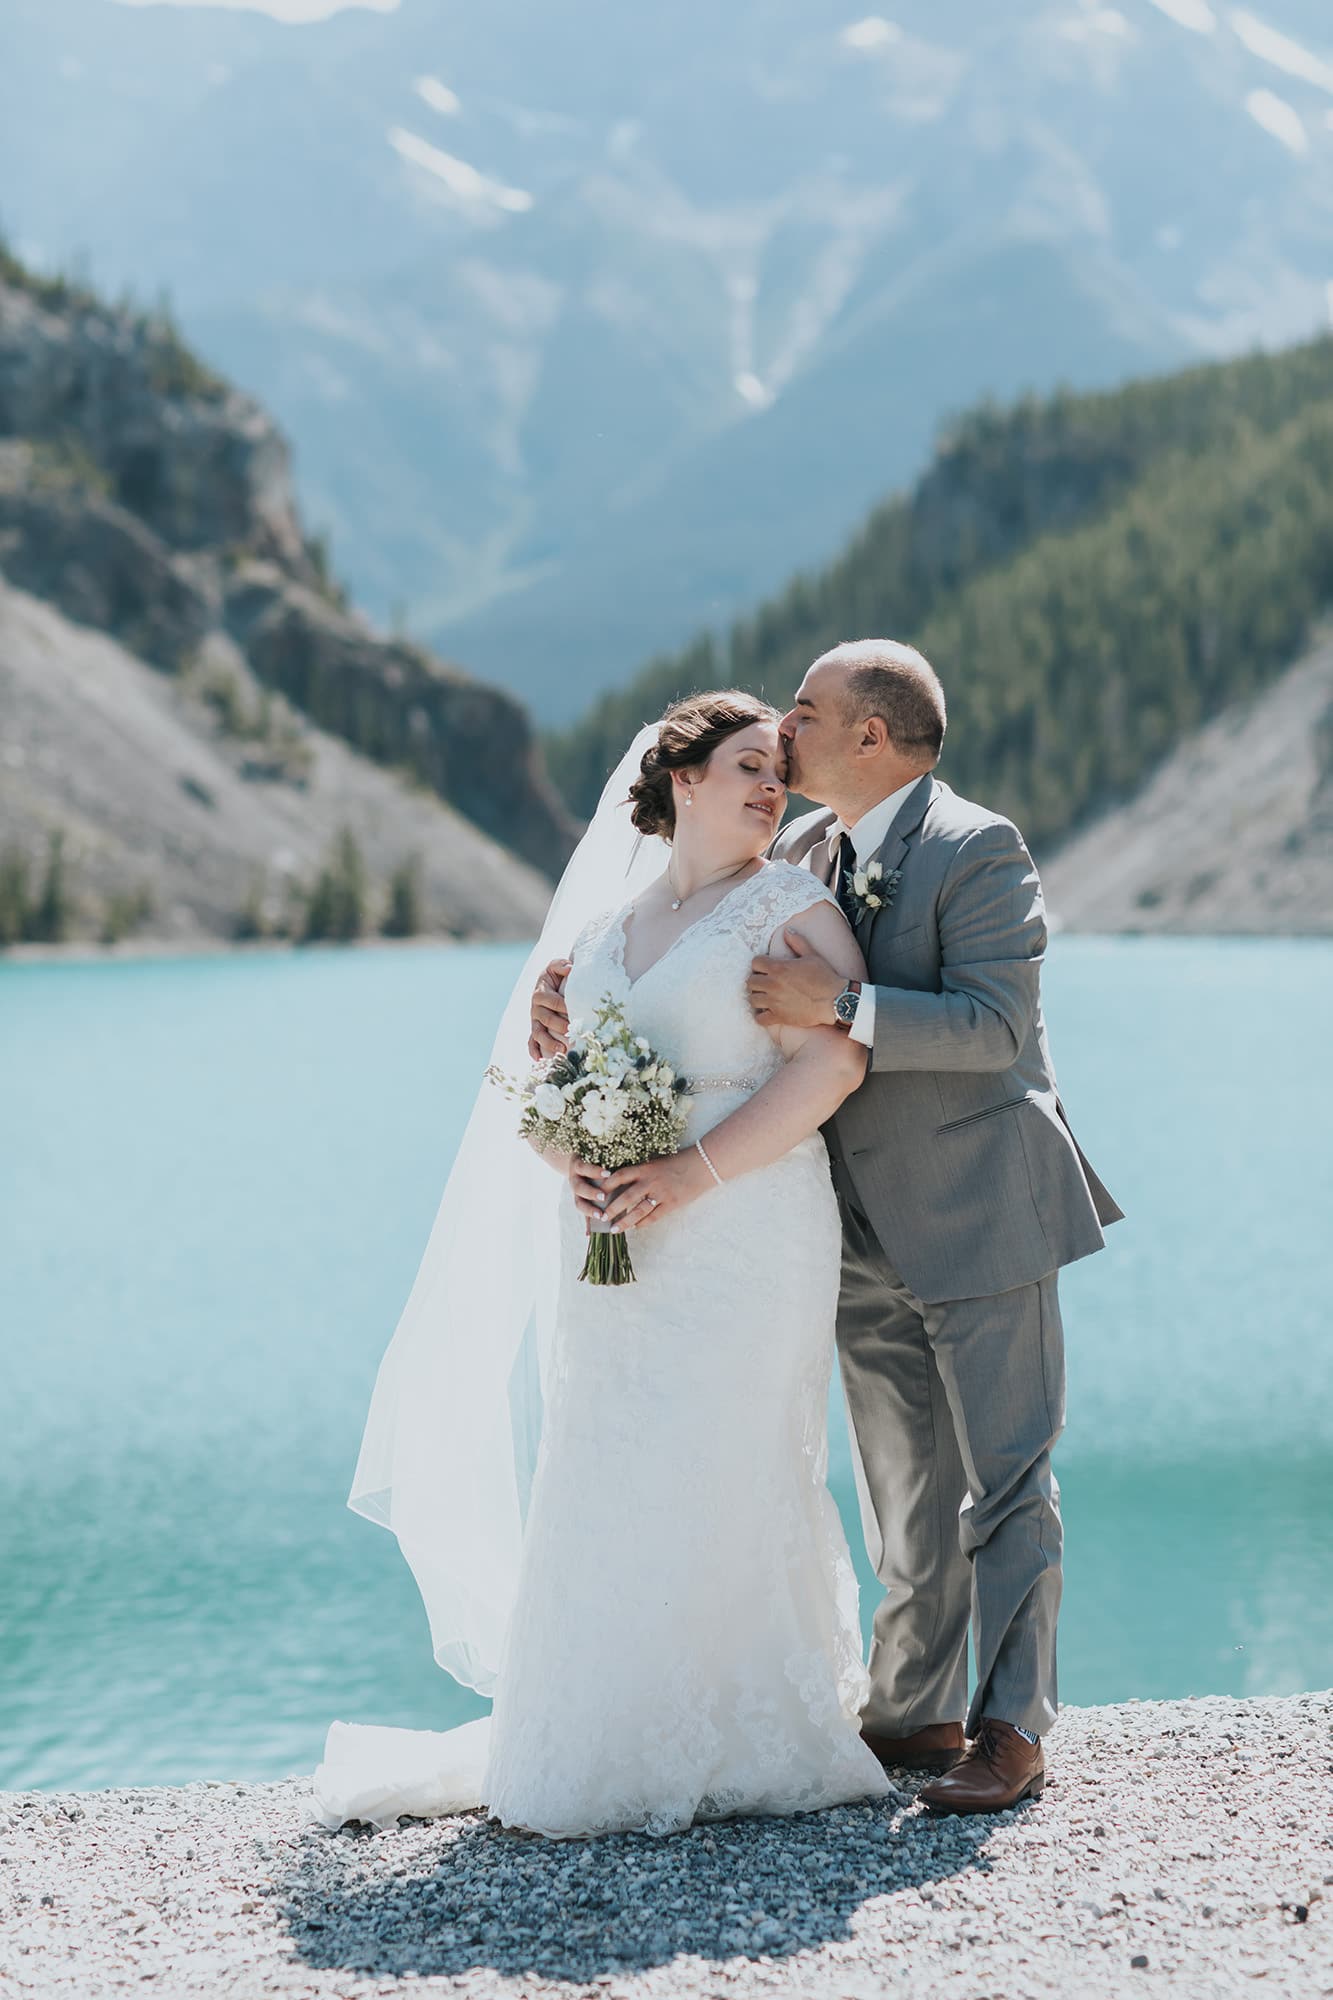 Whiteman's Pond Canmore wedding portraits bride groom